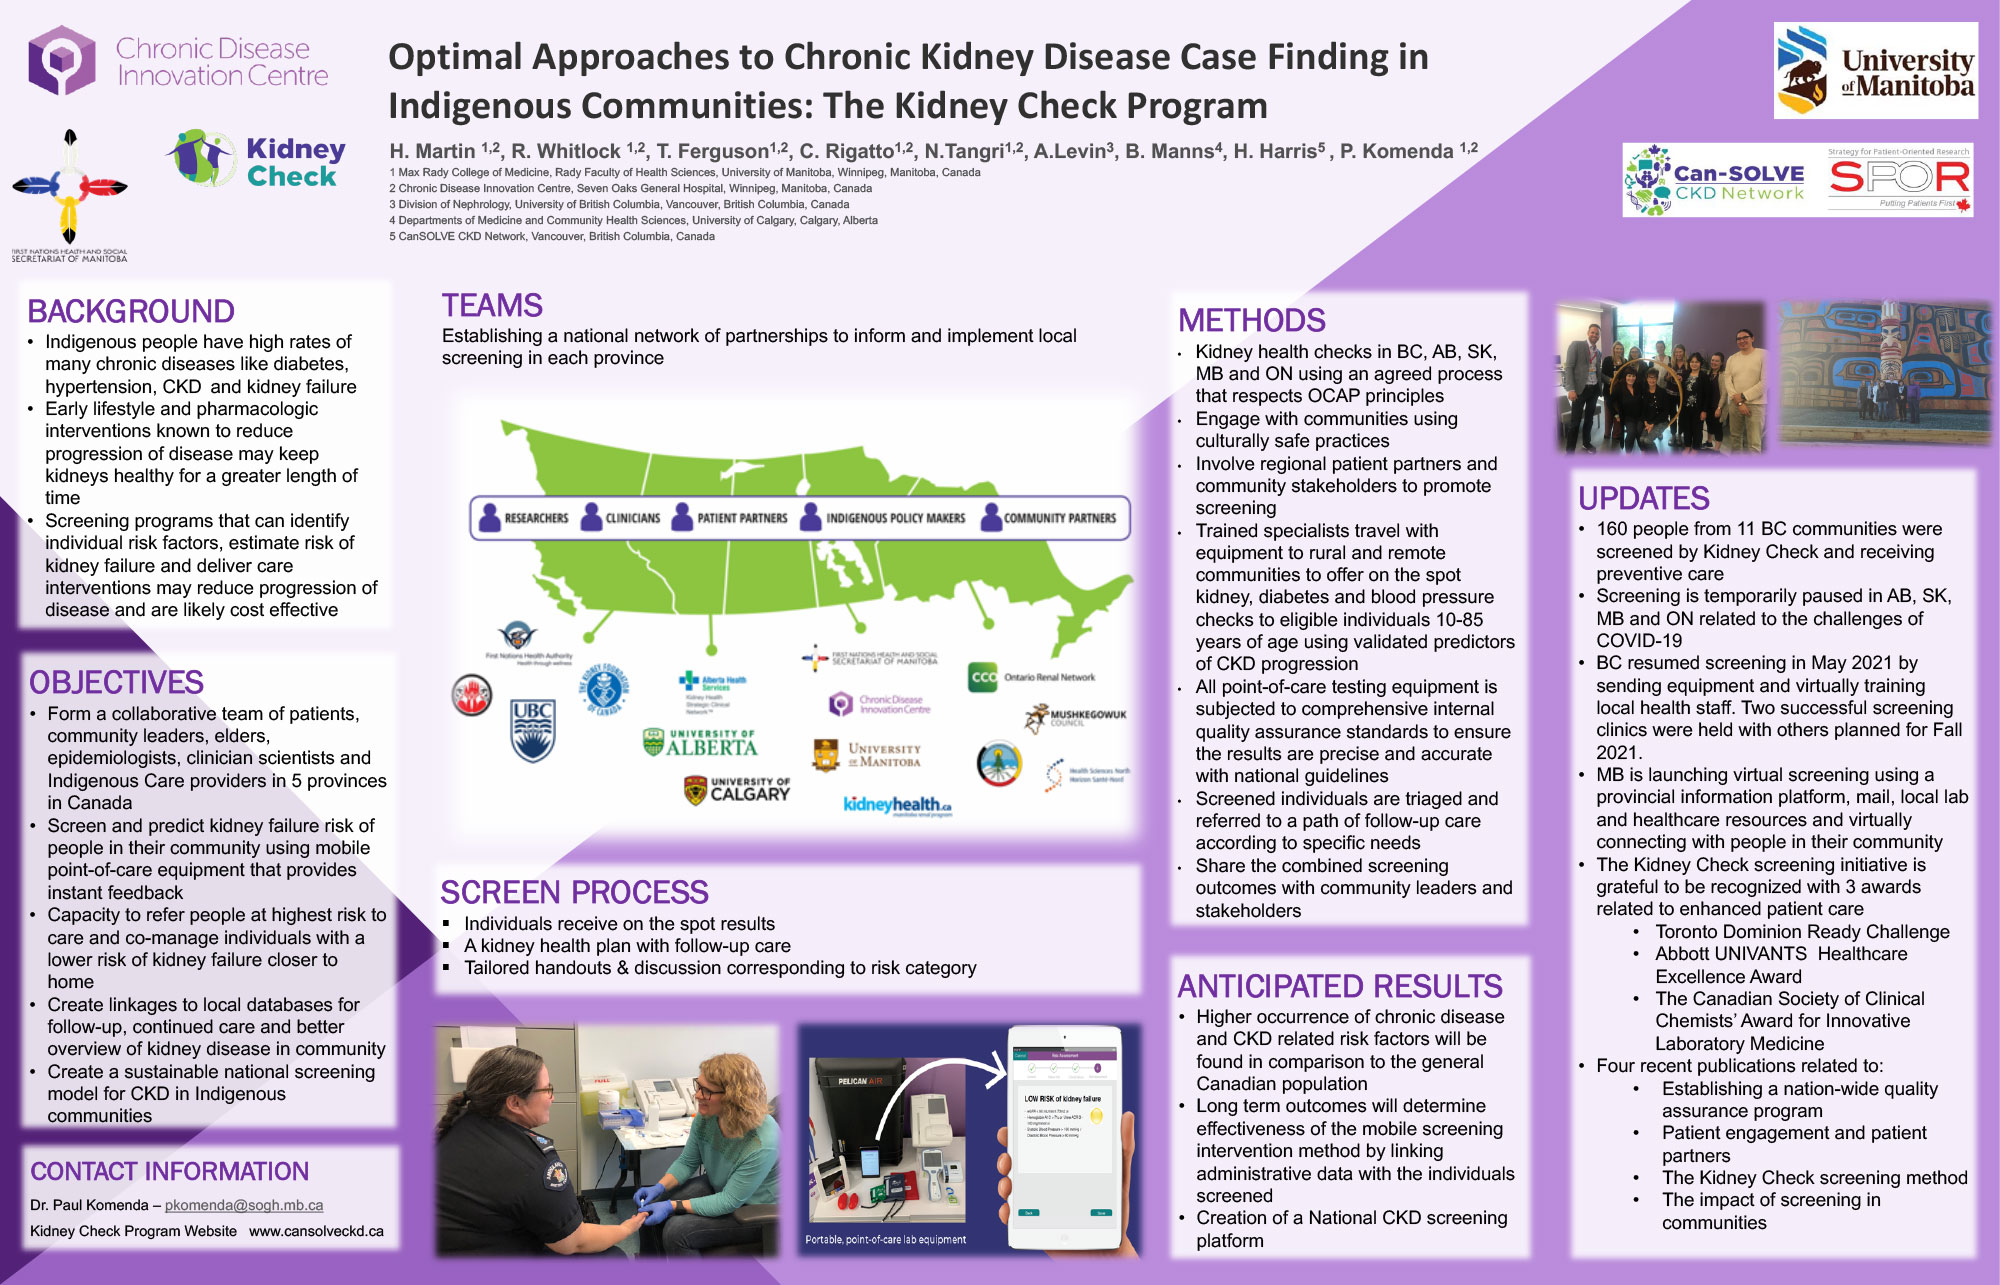 Kidney Check visual abstract